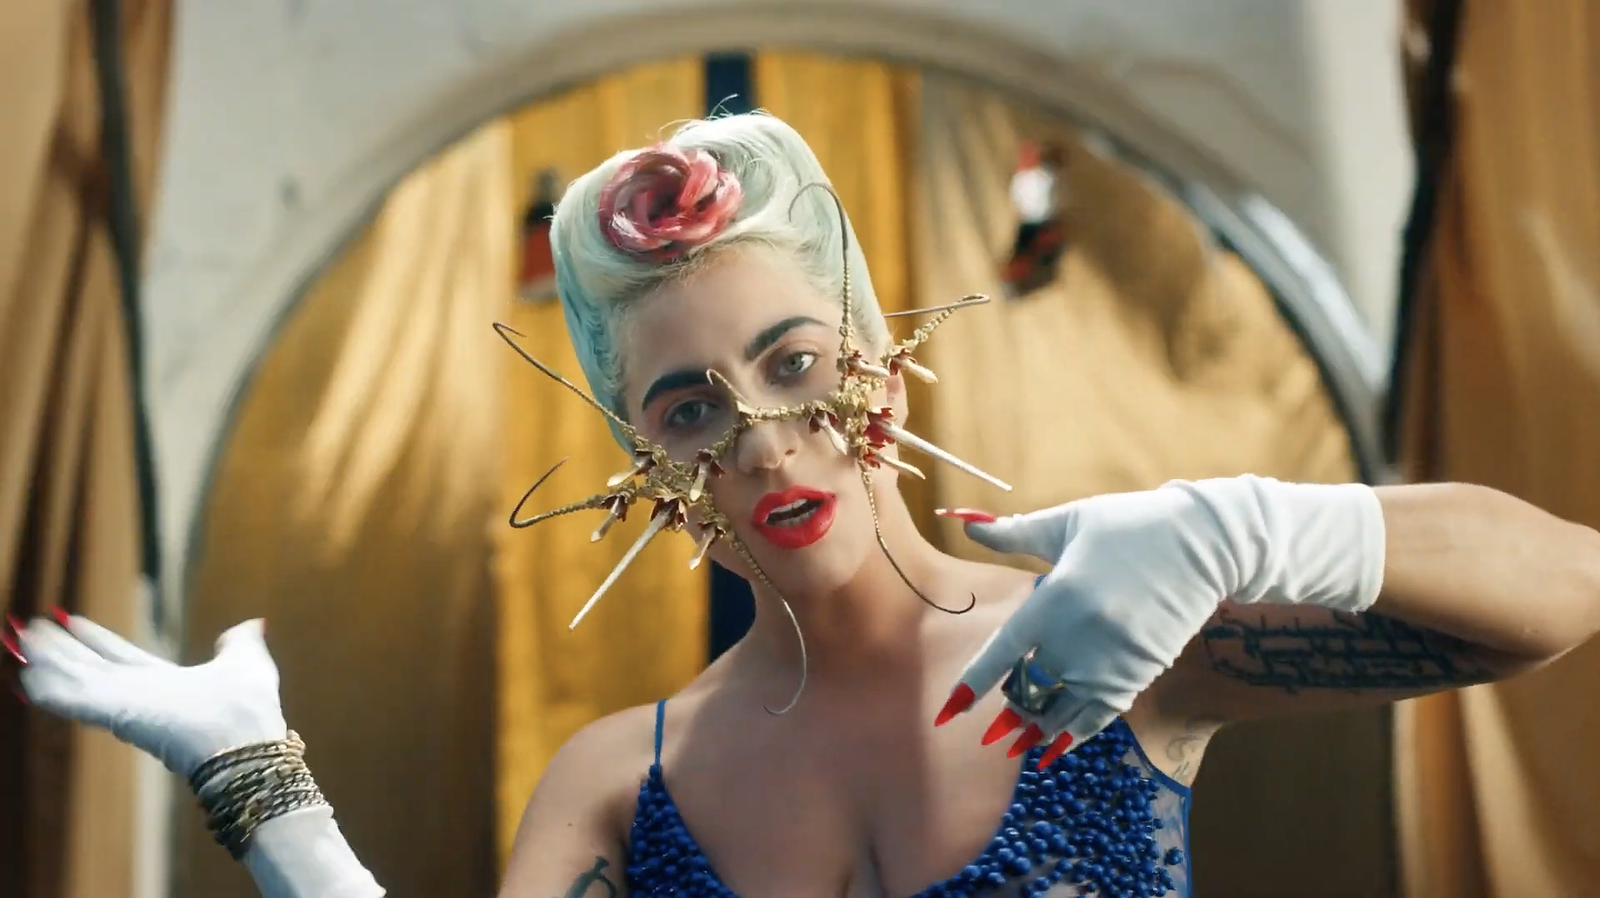 Lady Gaga's “911” Music Video: A .allure.com